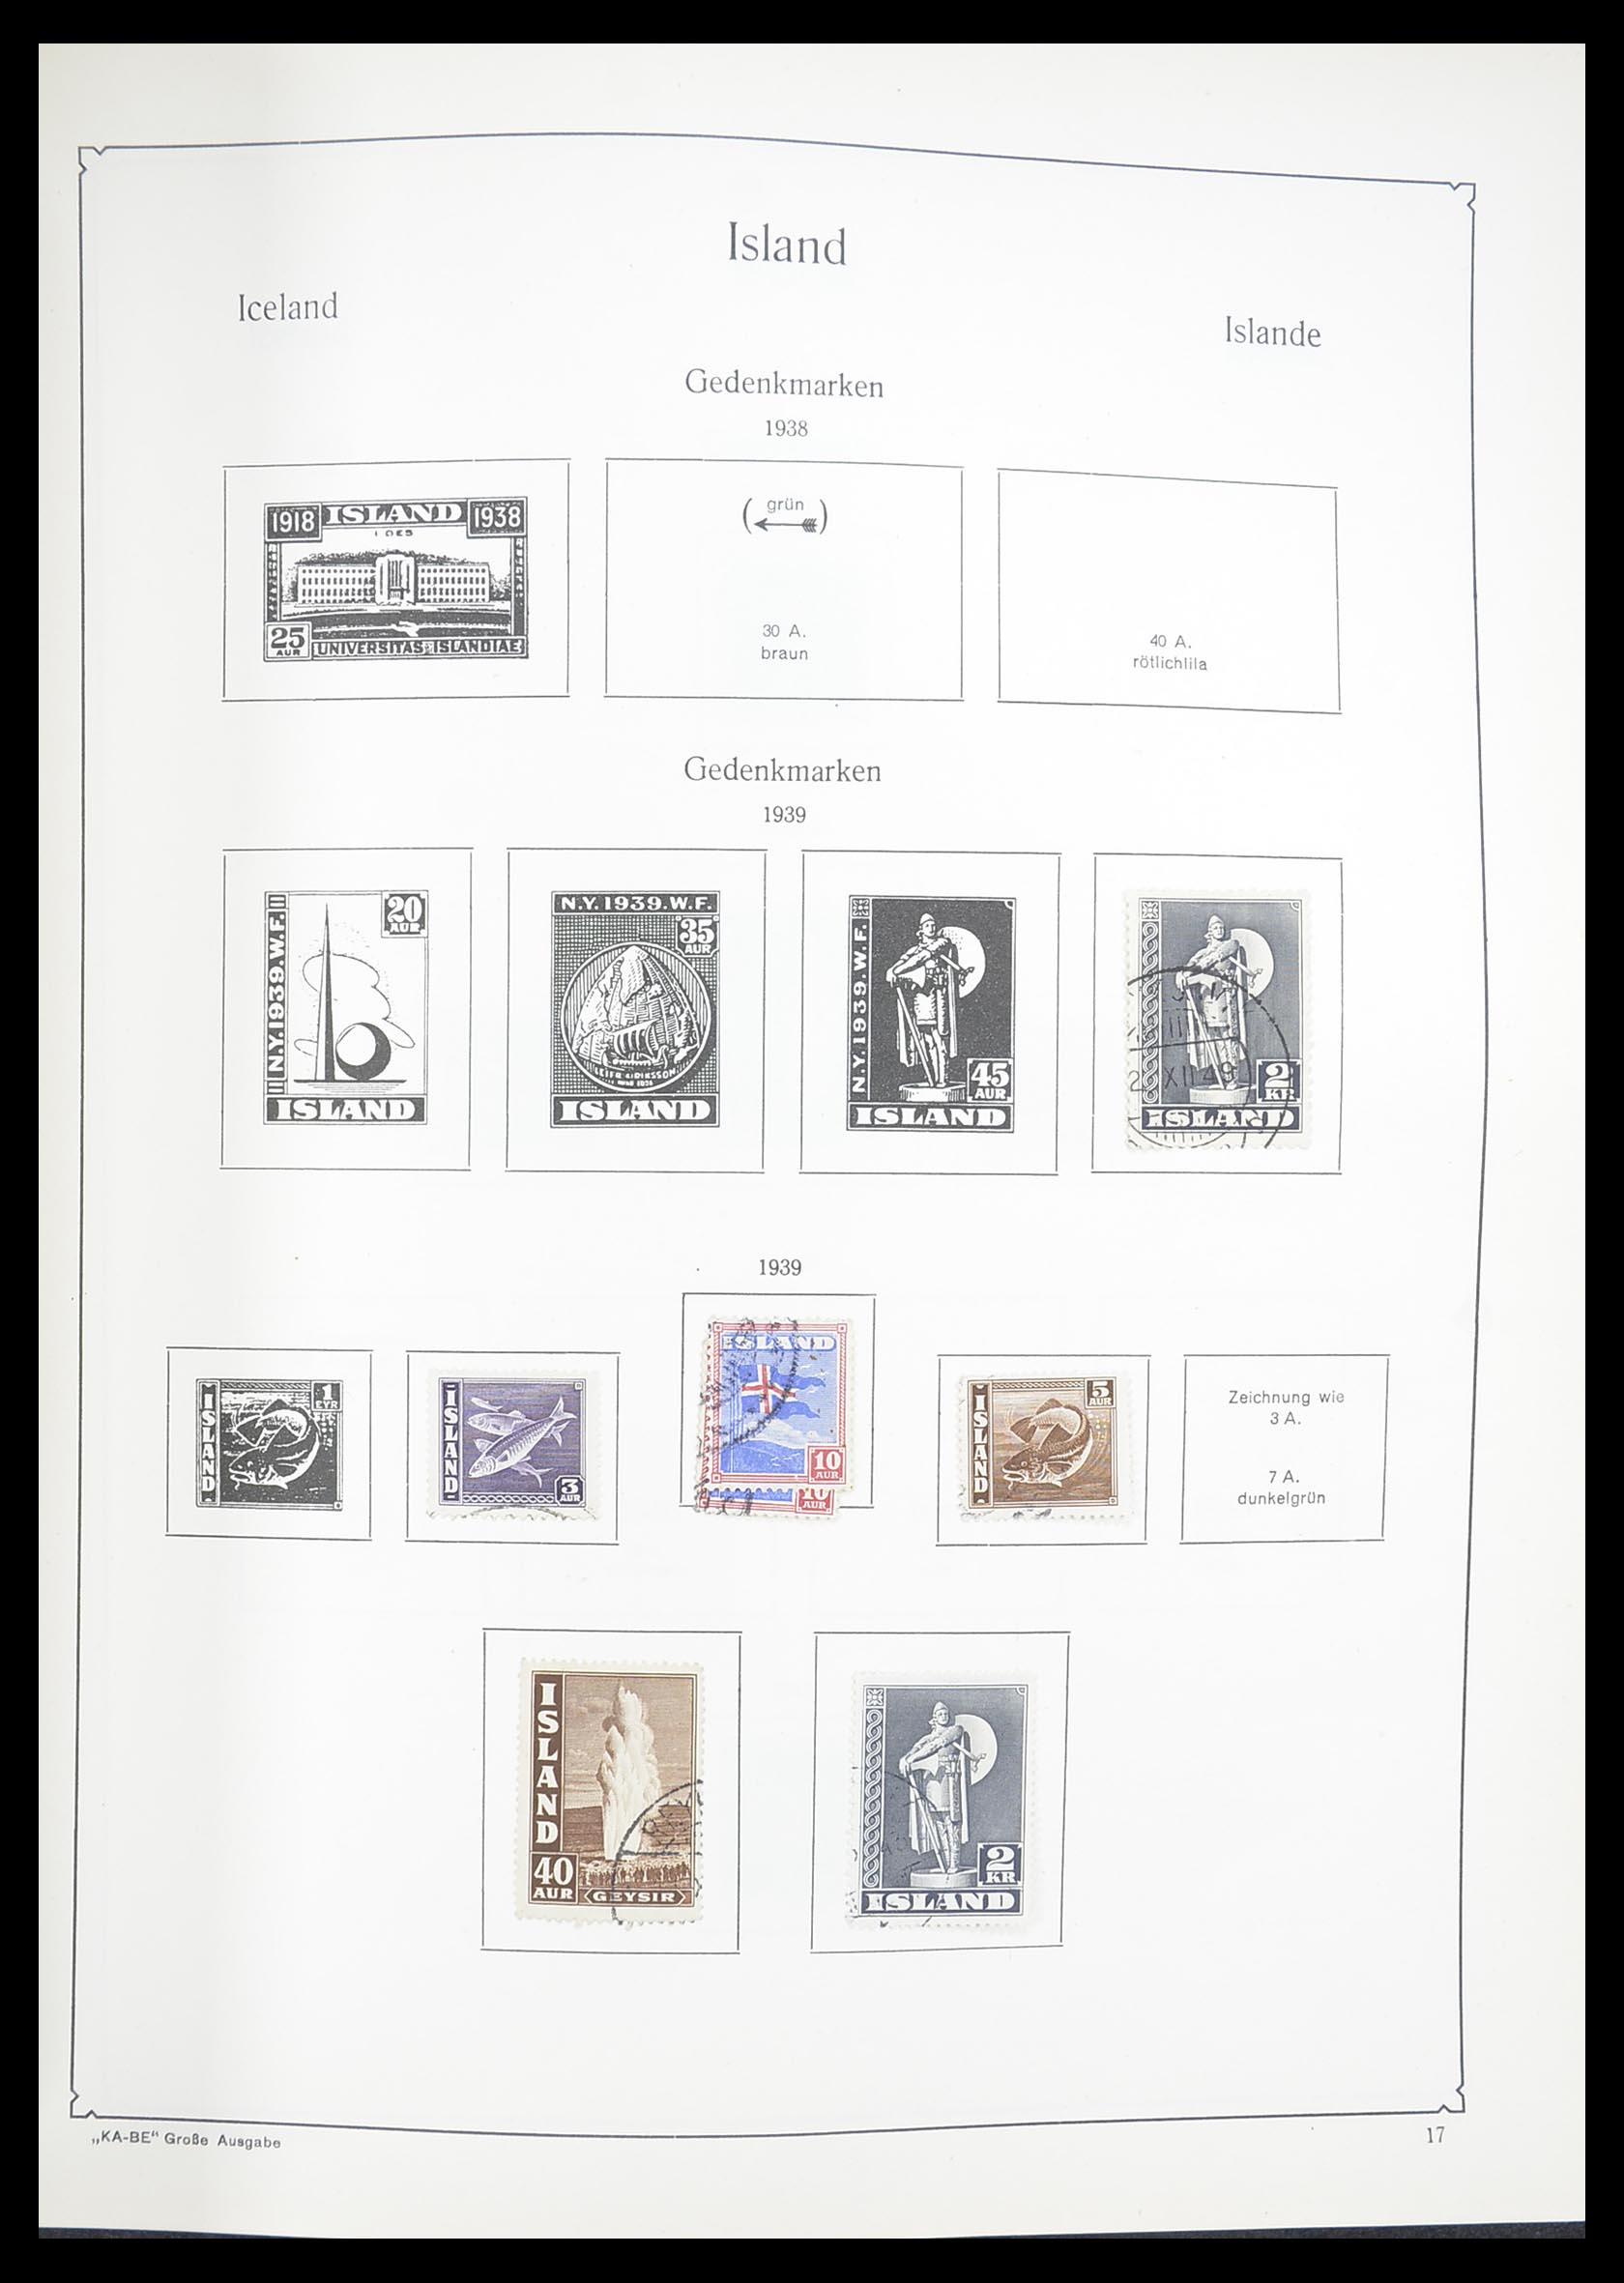 33379 073 - Stamp collection 33379 Scandinavia 1856-1972.